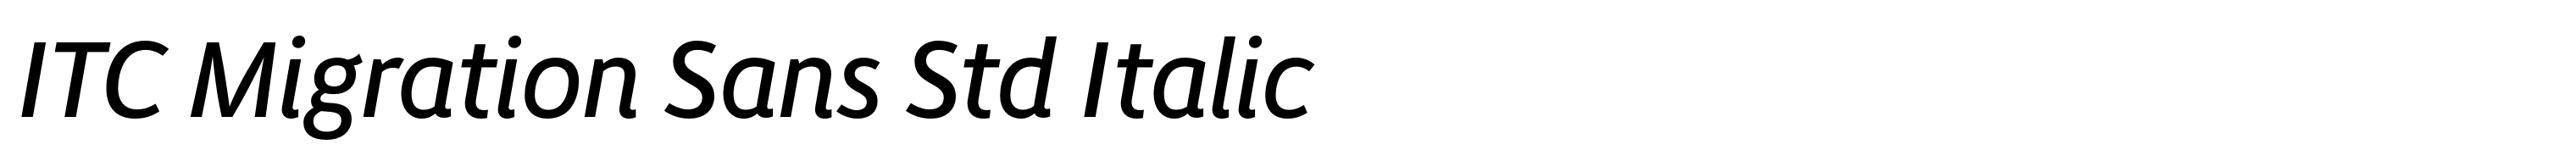 ITC Migration Sans Std Italic